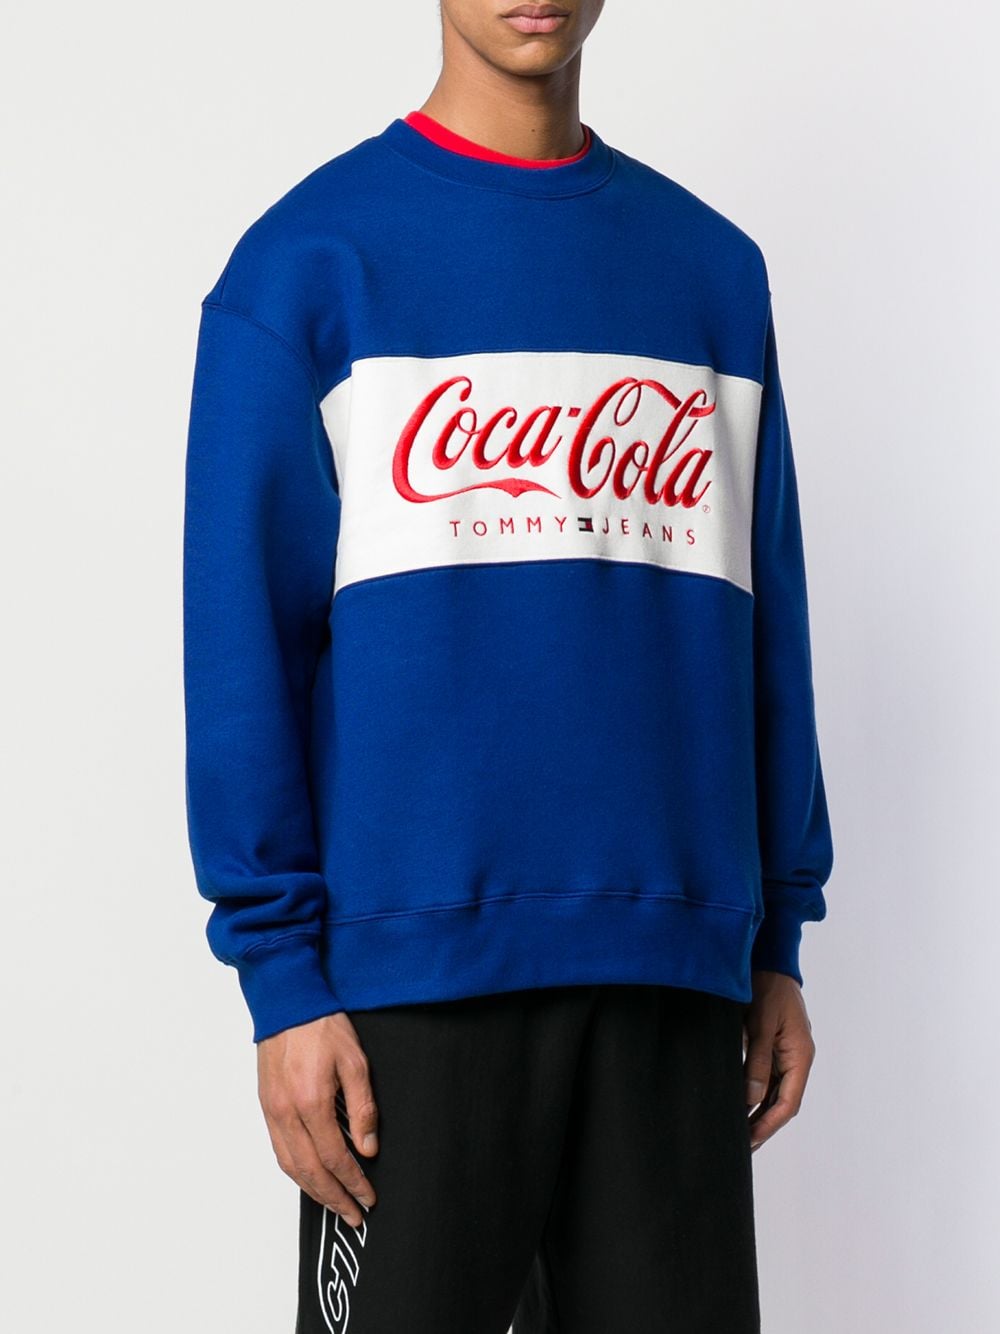 Tommy Jeans x Coca Cola sweatshirt $85 